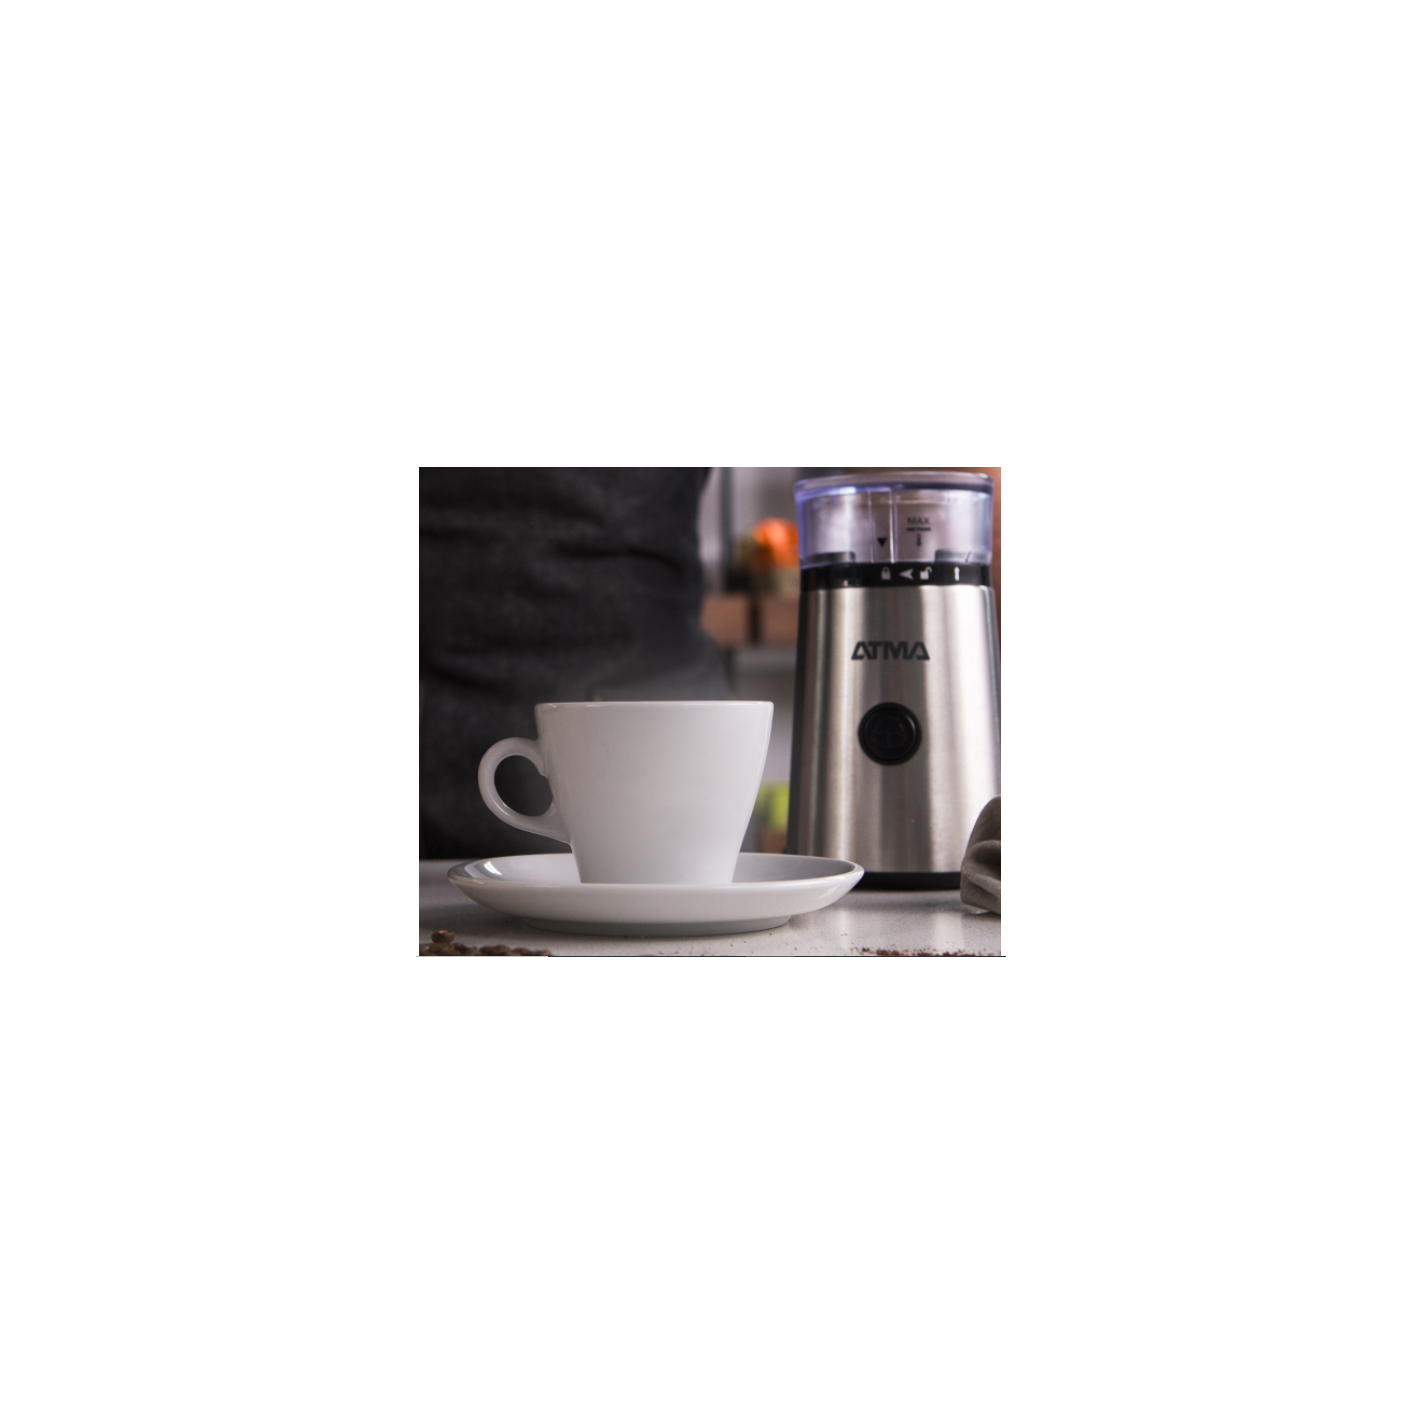 Molinillo de Café Atma MC8141N/P Inox